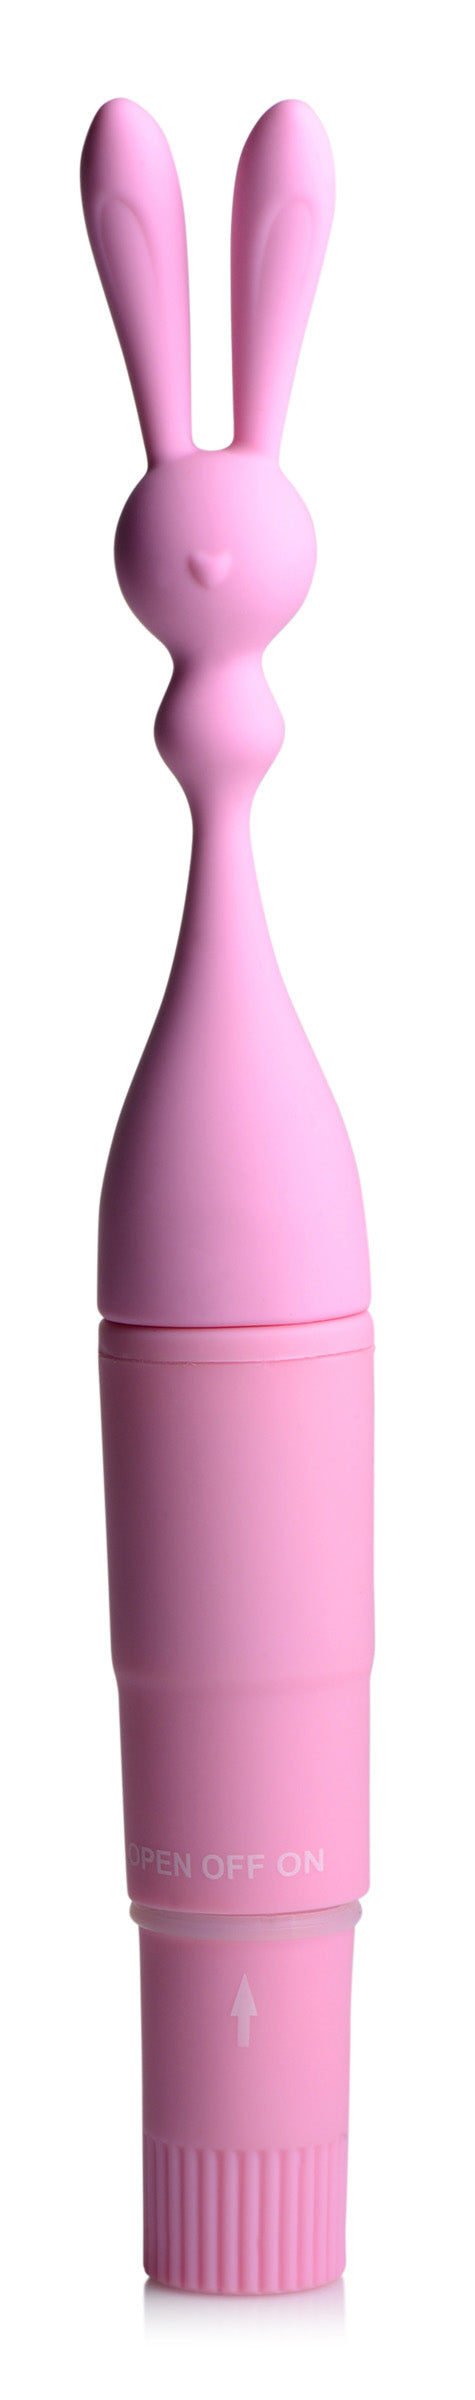 XR Brands Bunny Rocket Silicone Vibrator